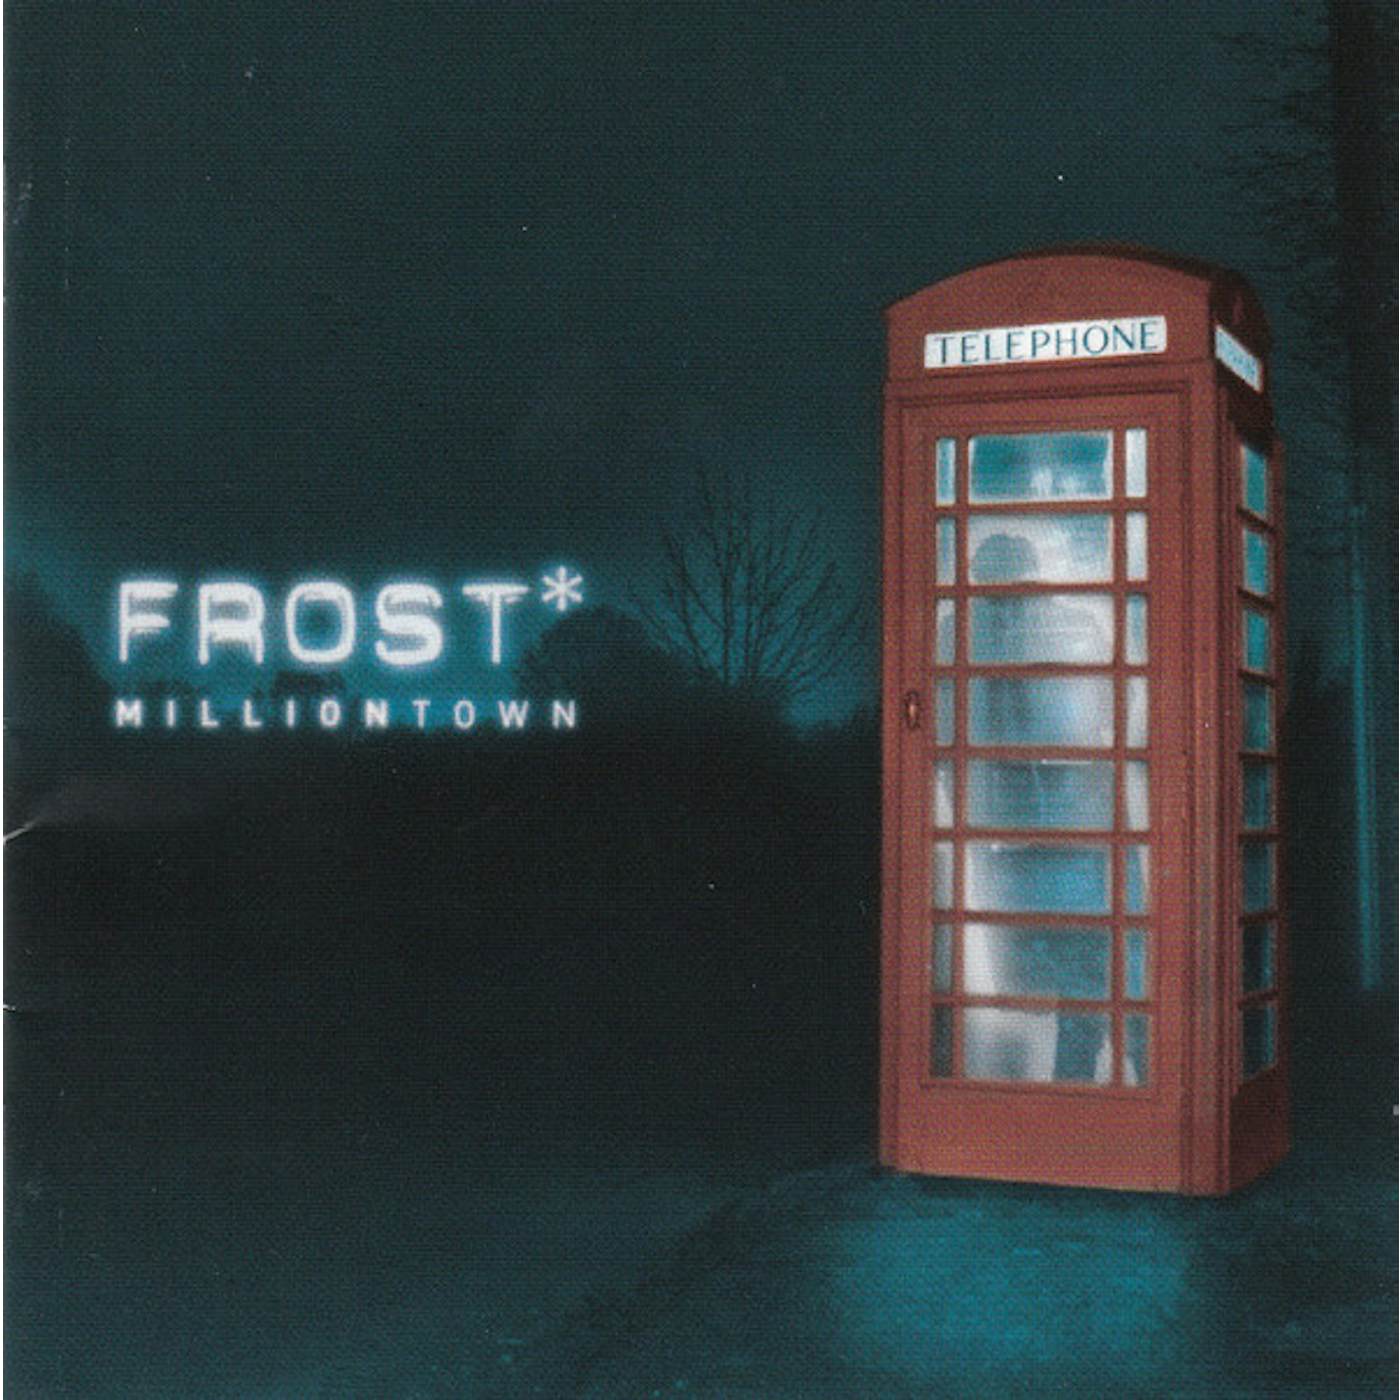 Frost* MILLIONTOWN (3LP/REISSUE/IMPORT) Vinyl Record